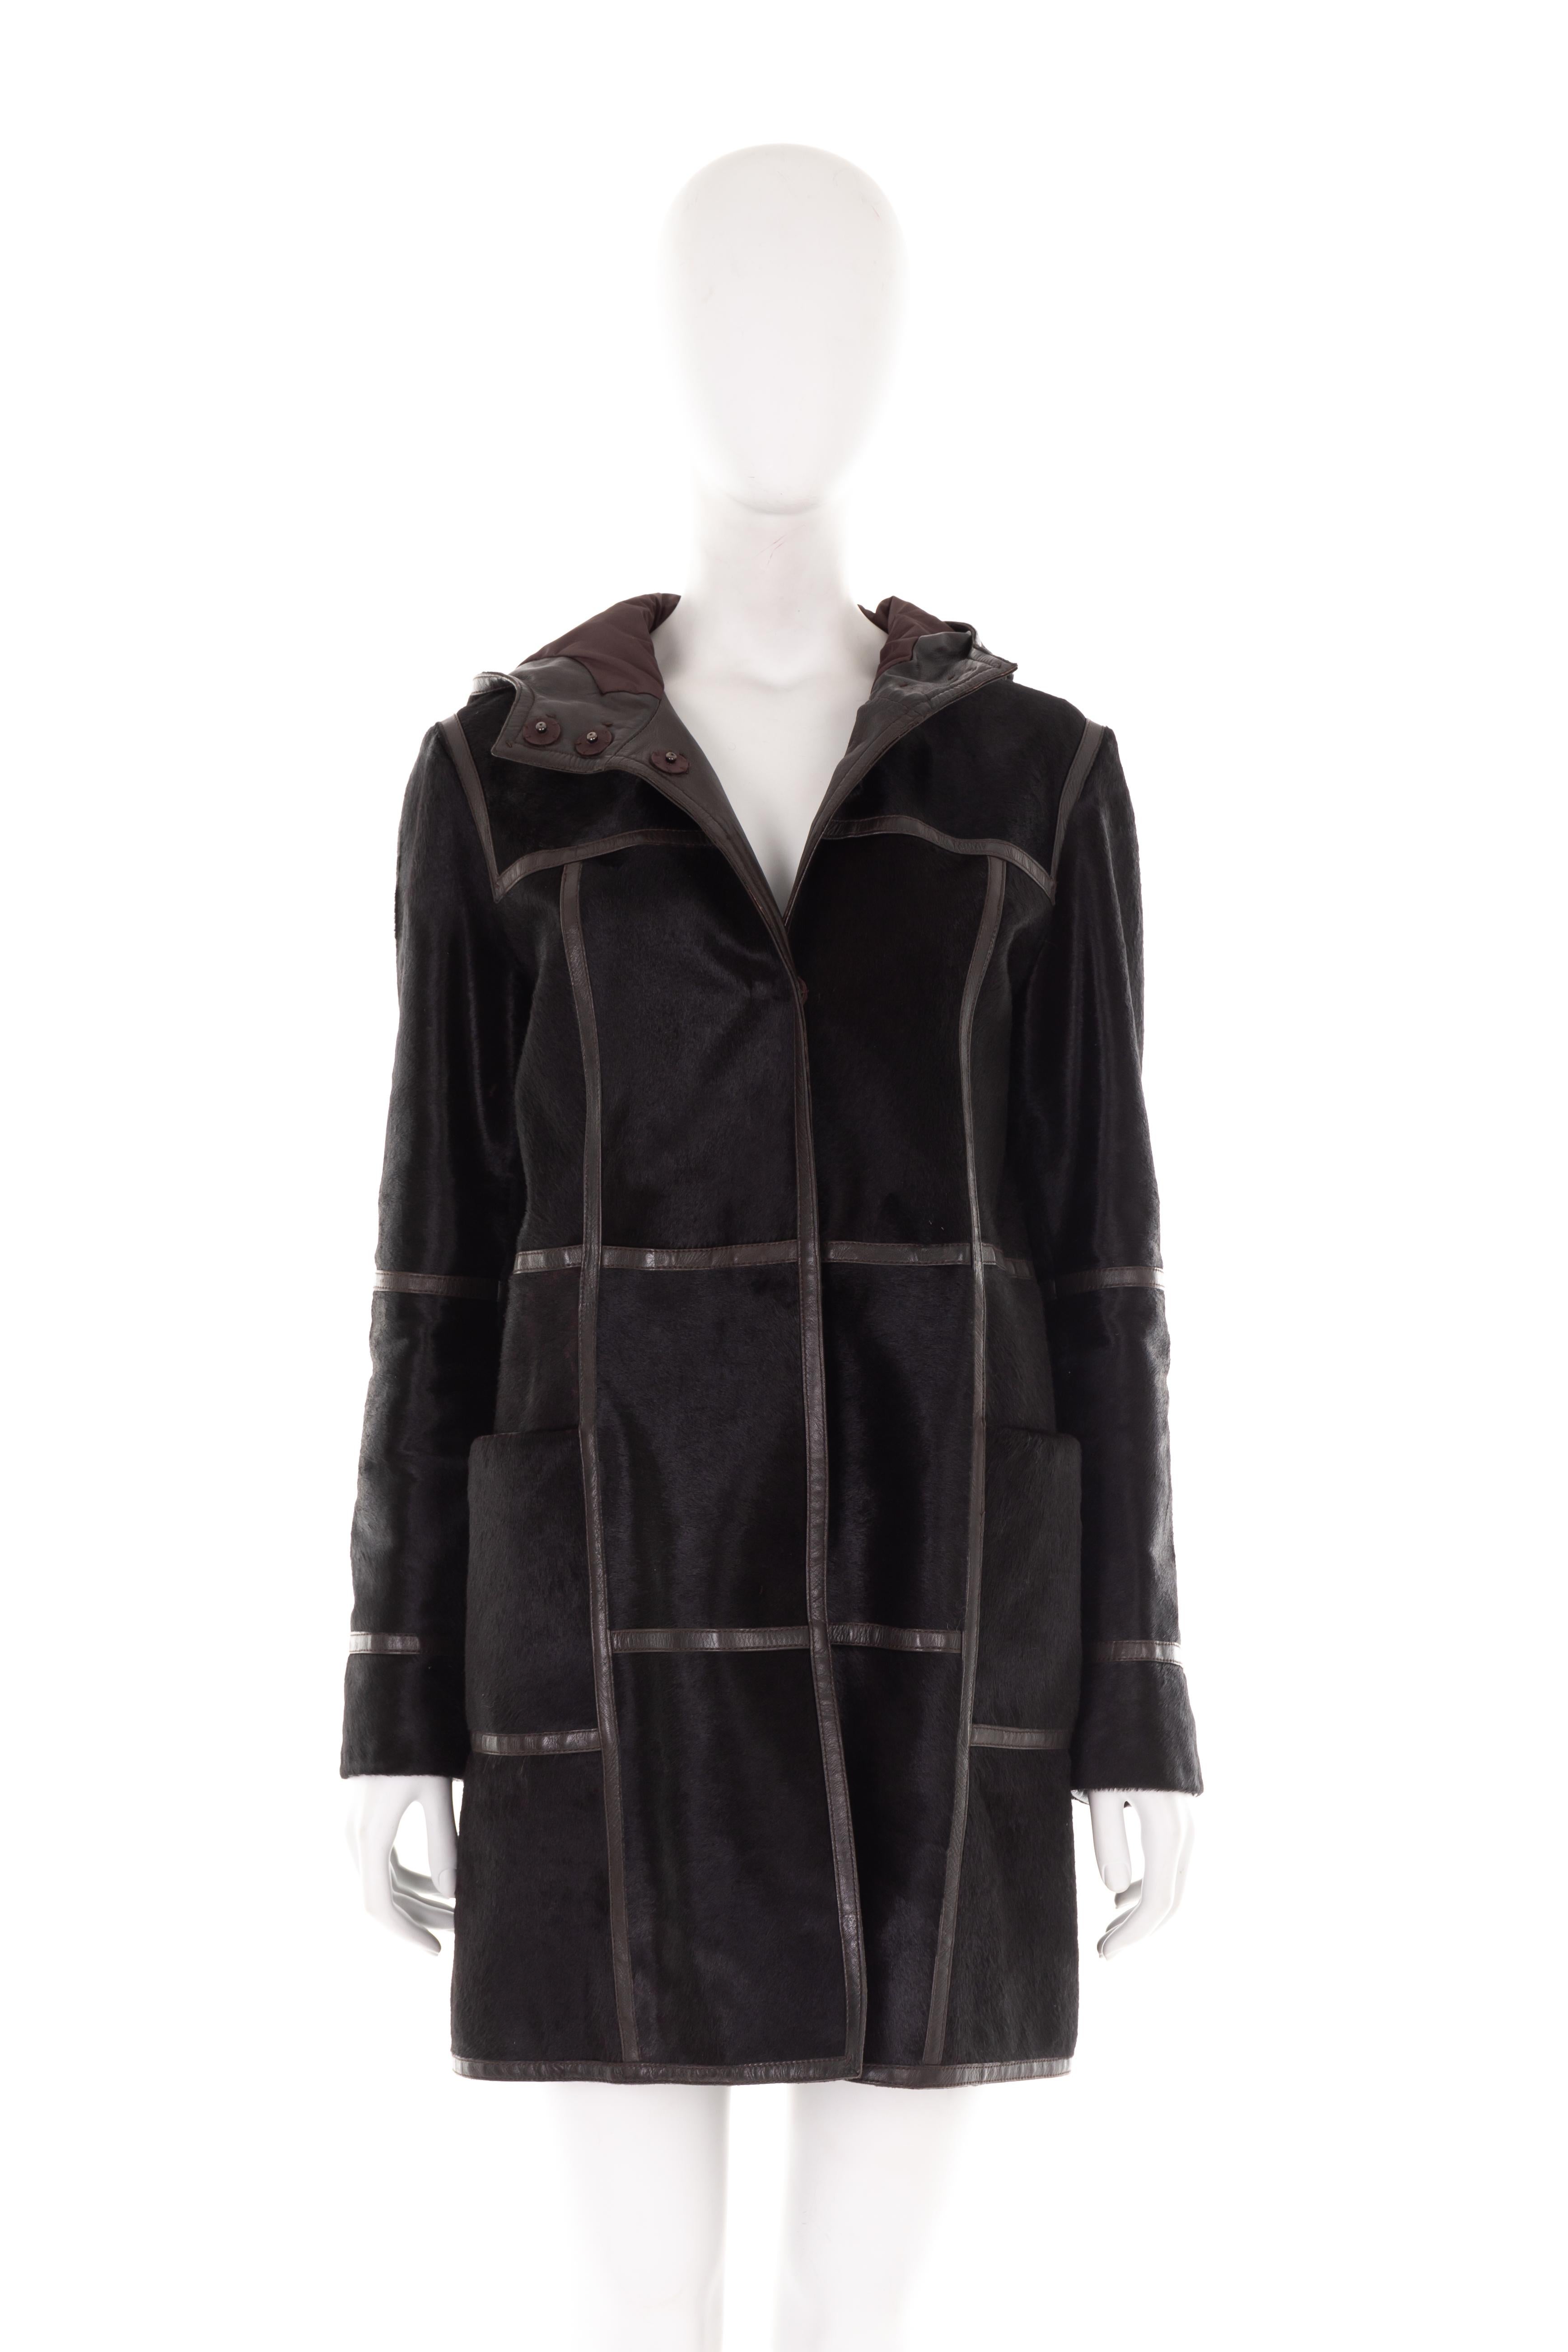 Prada by Miuccia Prada F/W 2005 black calfskin hooded coat  For Sale 4